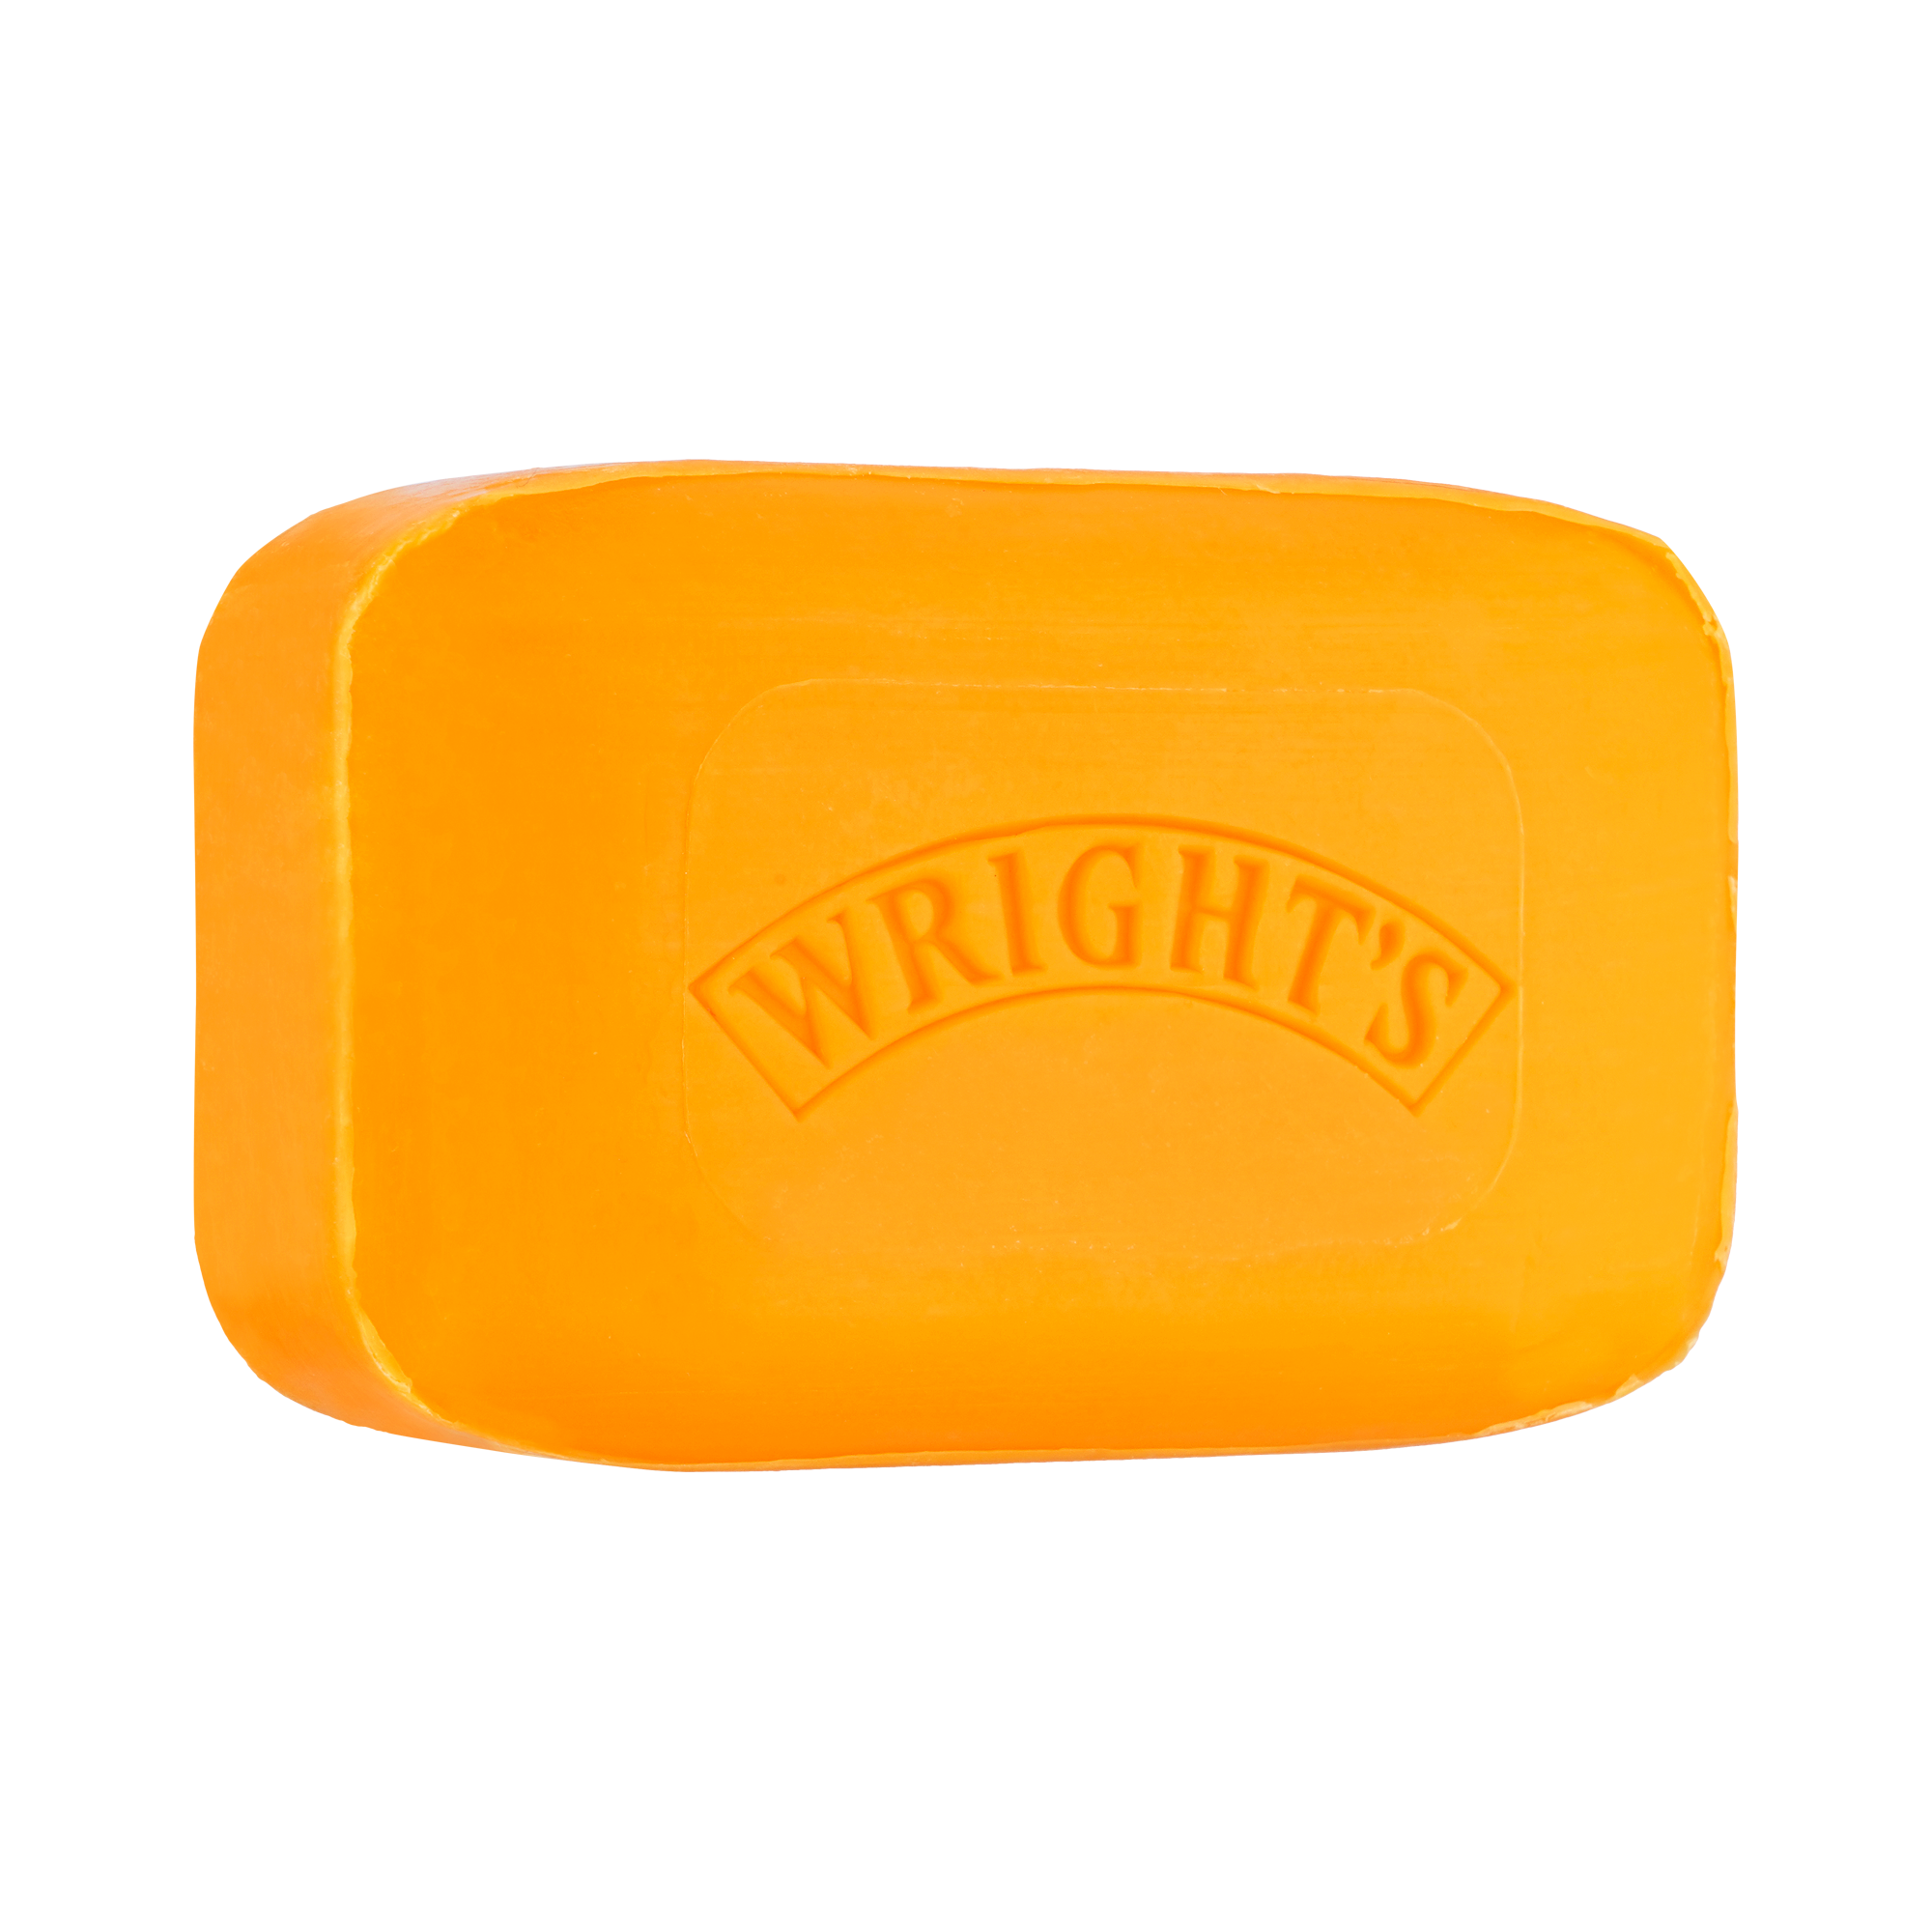 Wright's Coal Tar Soap 125g